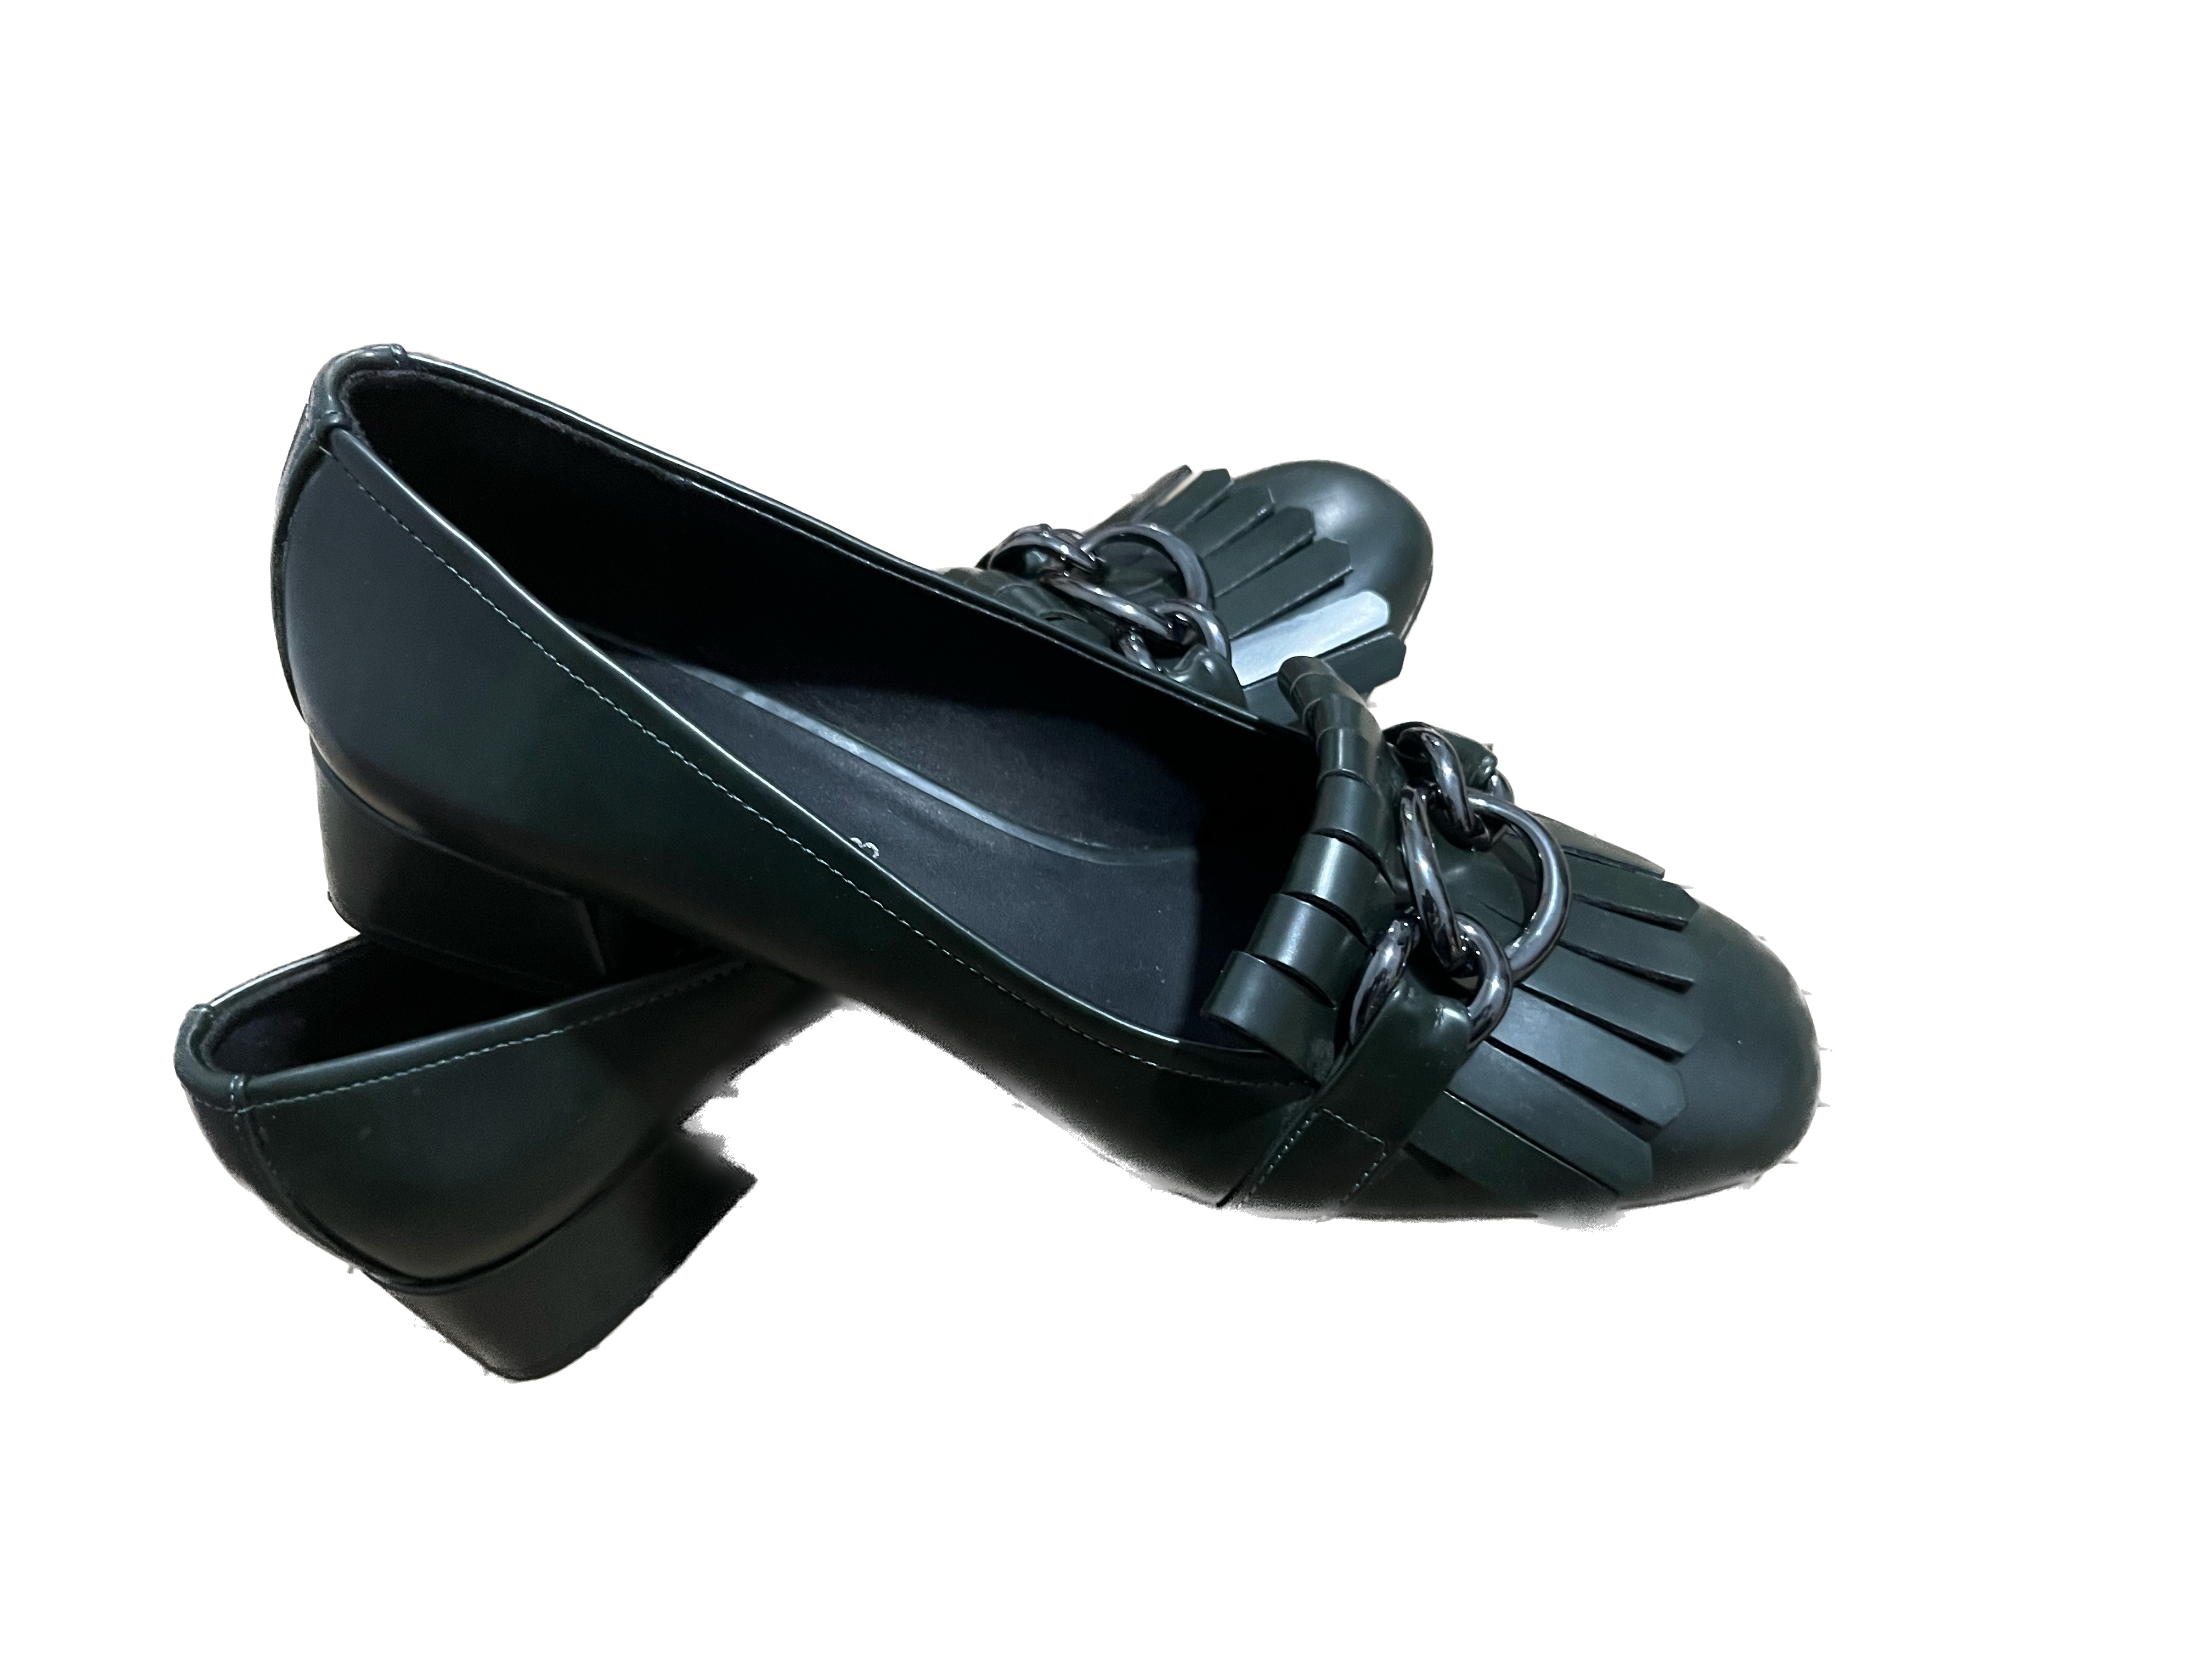 lora ferres Patent leatherclassic shoes